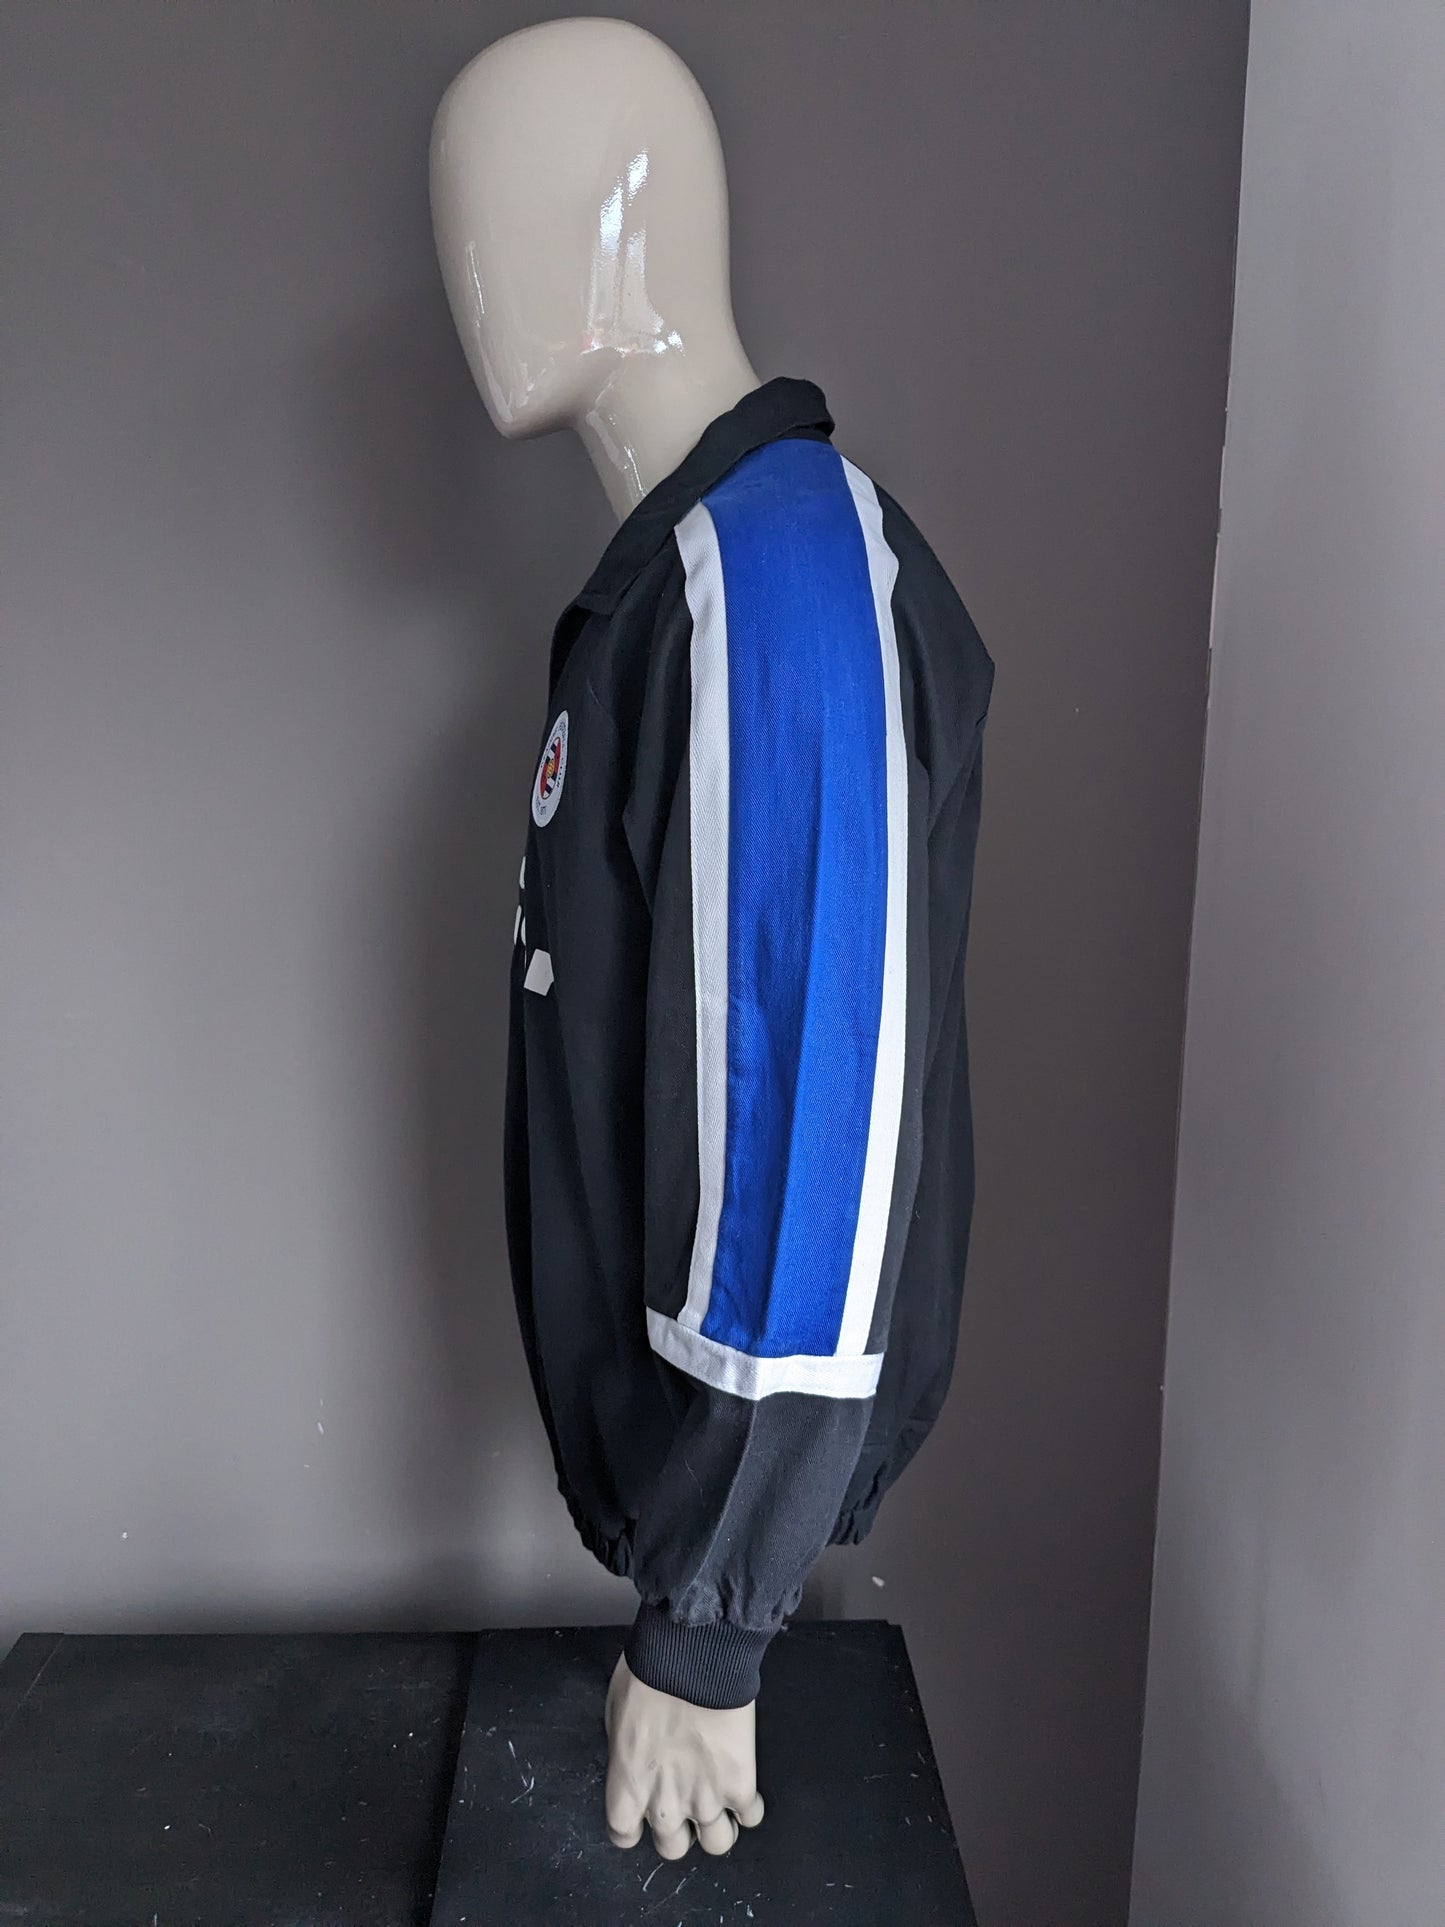 MIZUNO ORIGINAL "Reading Football Club" Polo Sweater. Couleur bleu blanc noir. Taille XL